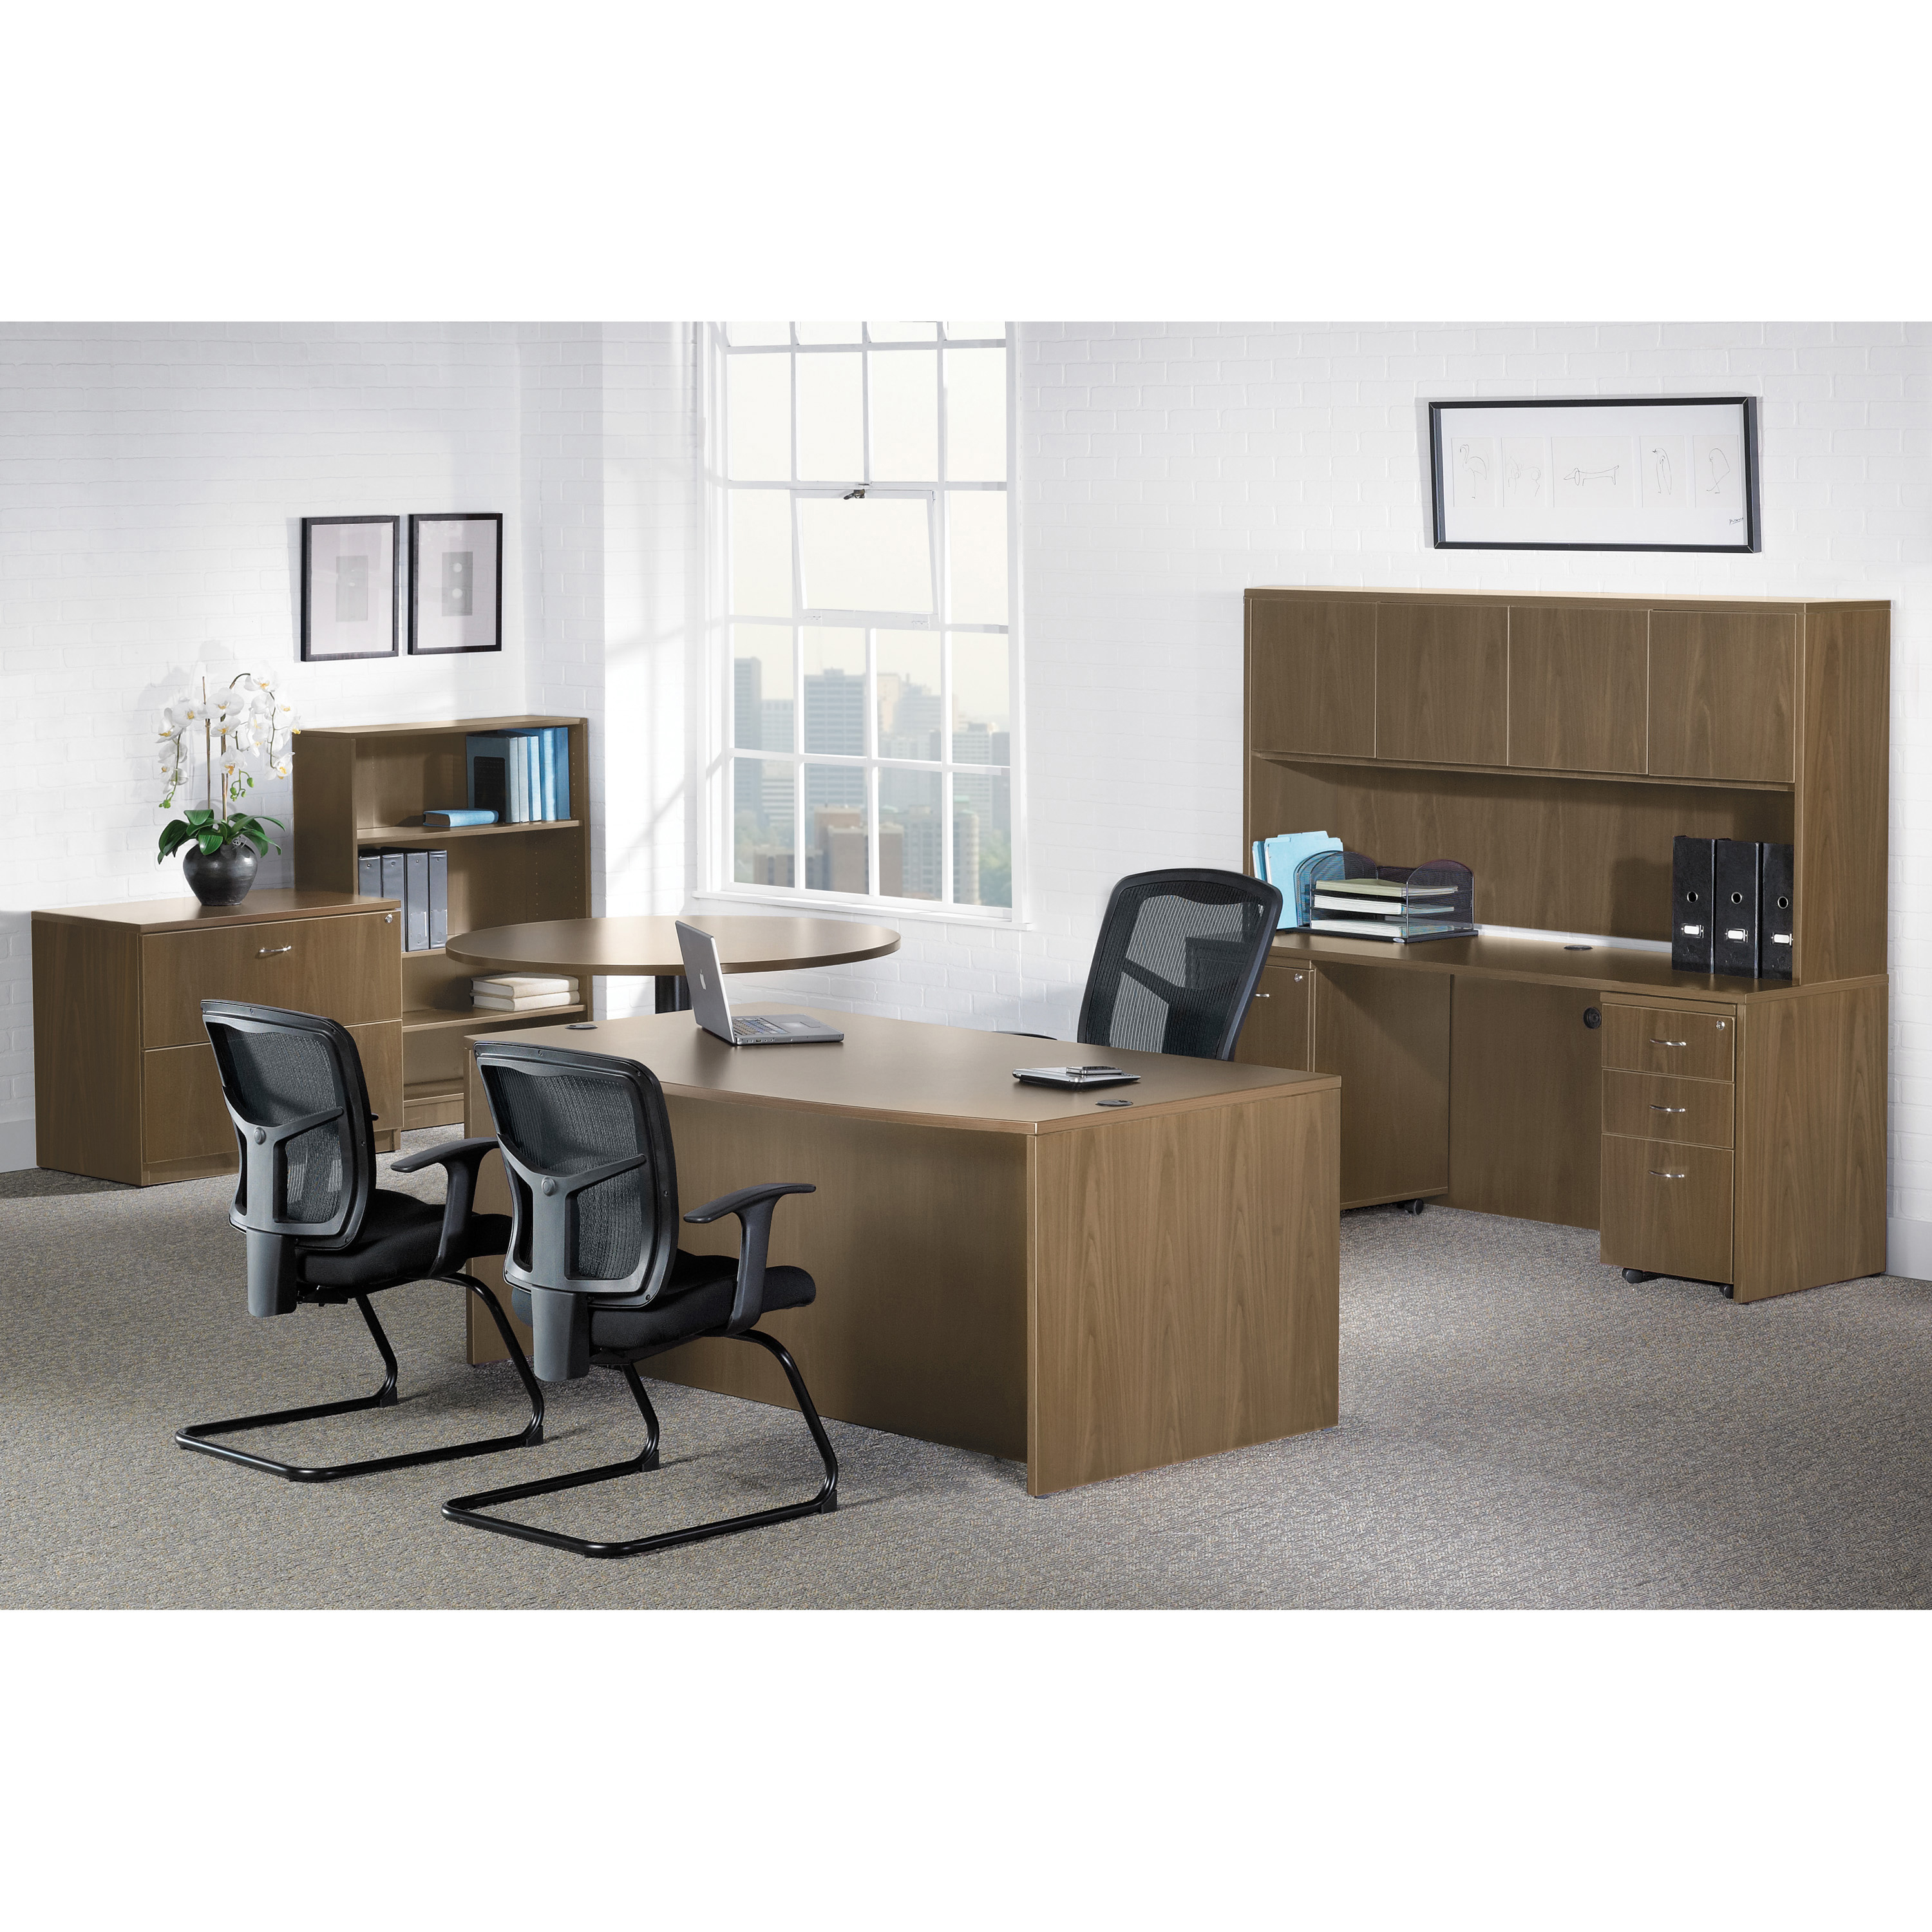 42" Width X 24" Depth X 29.5" Details about   Lorell Walnut Laminate Office Suite Desking 